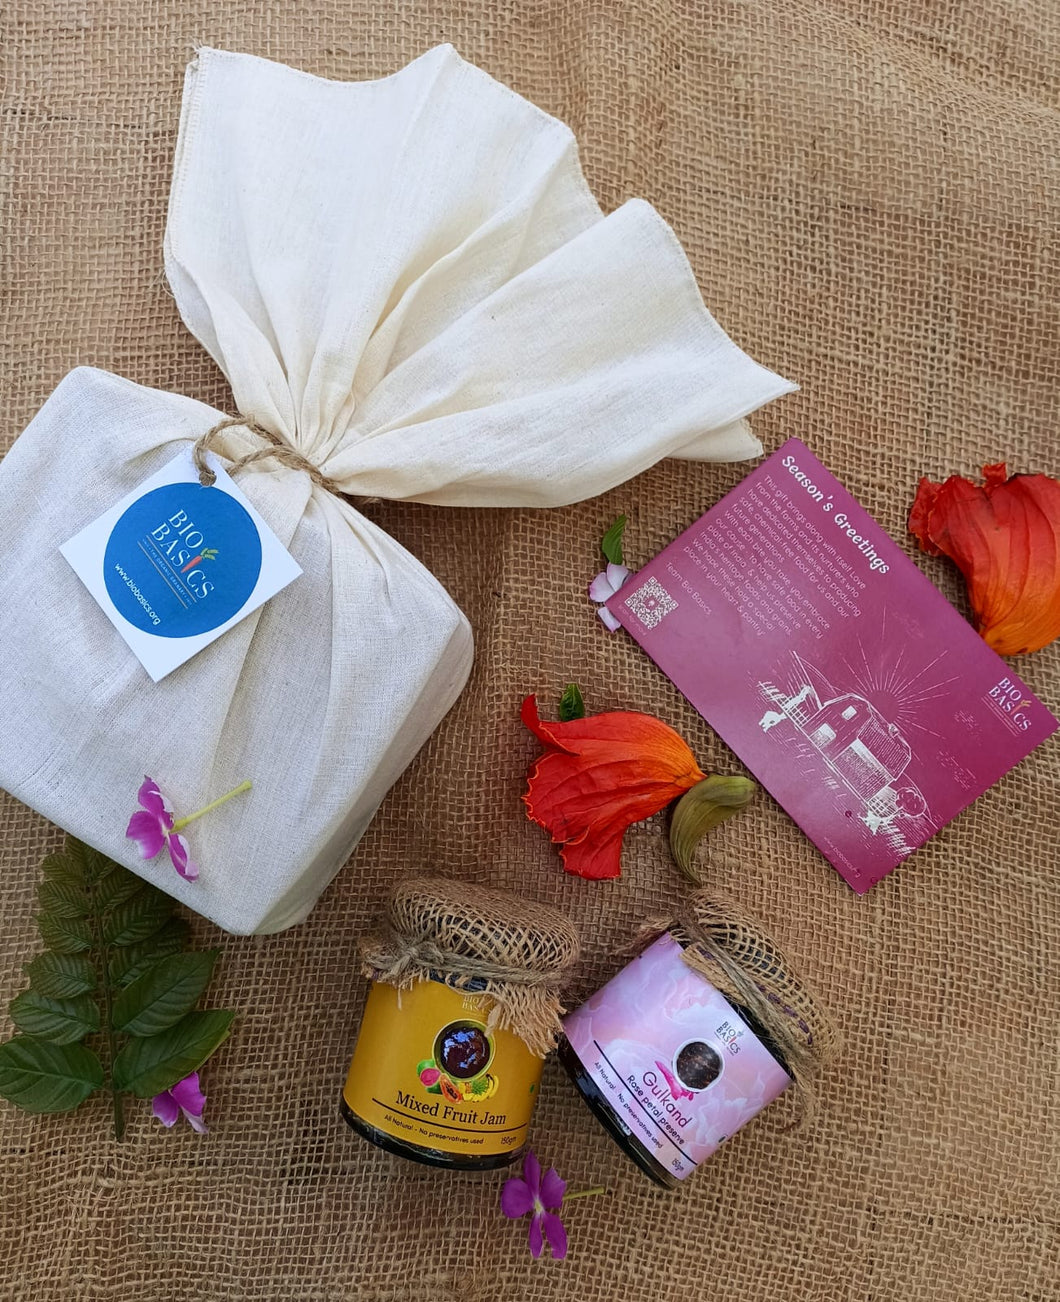 Diwali Gift Pack - Gulkahand & Mixed fruit jam